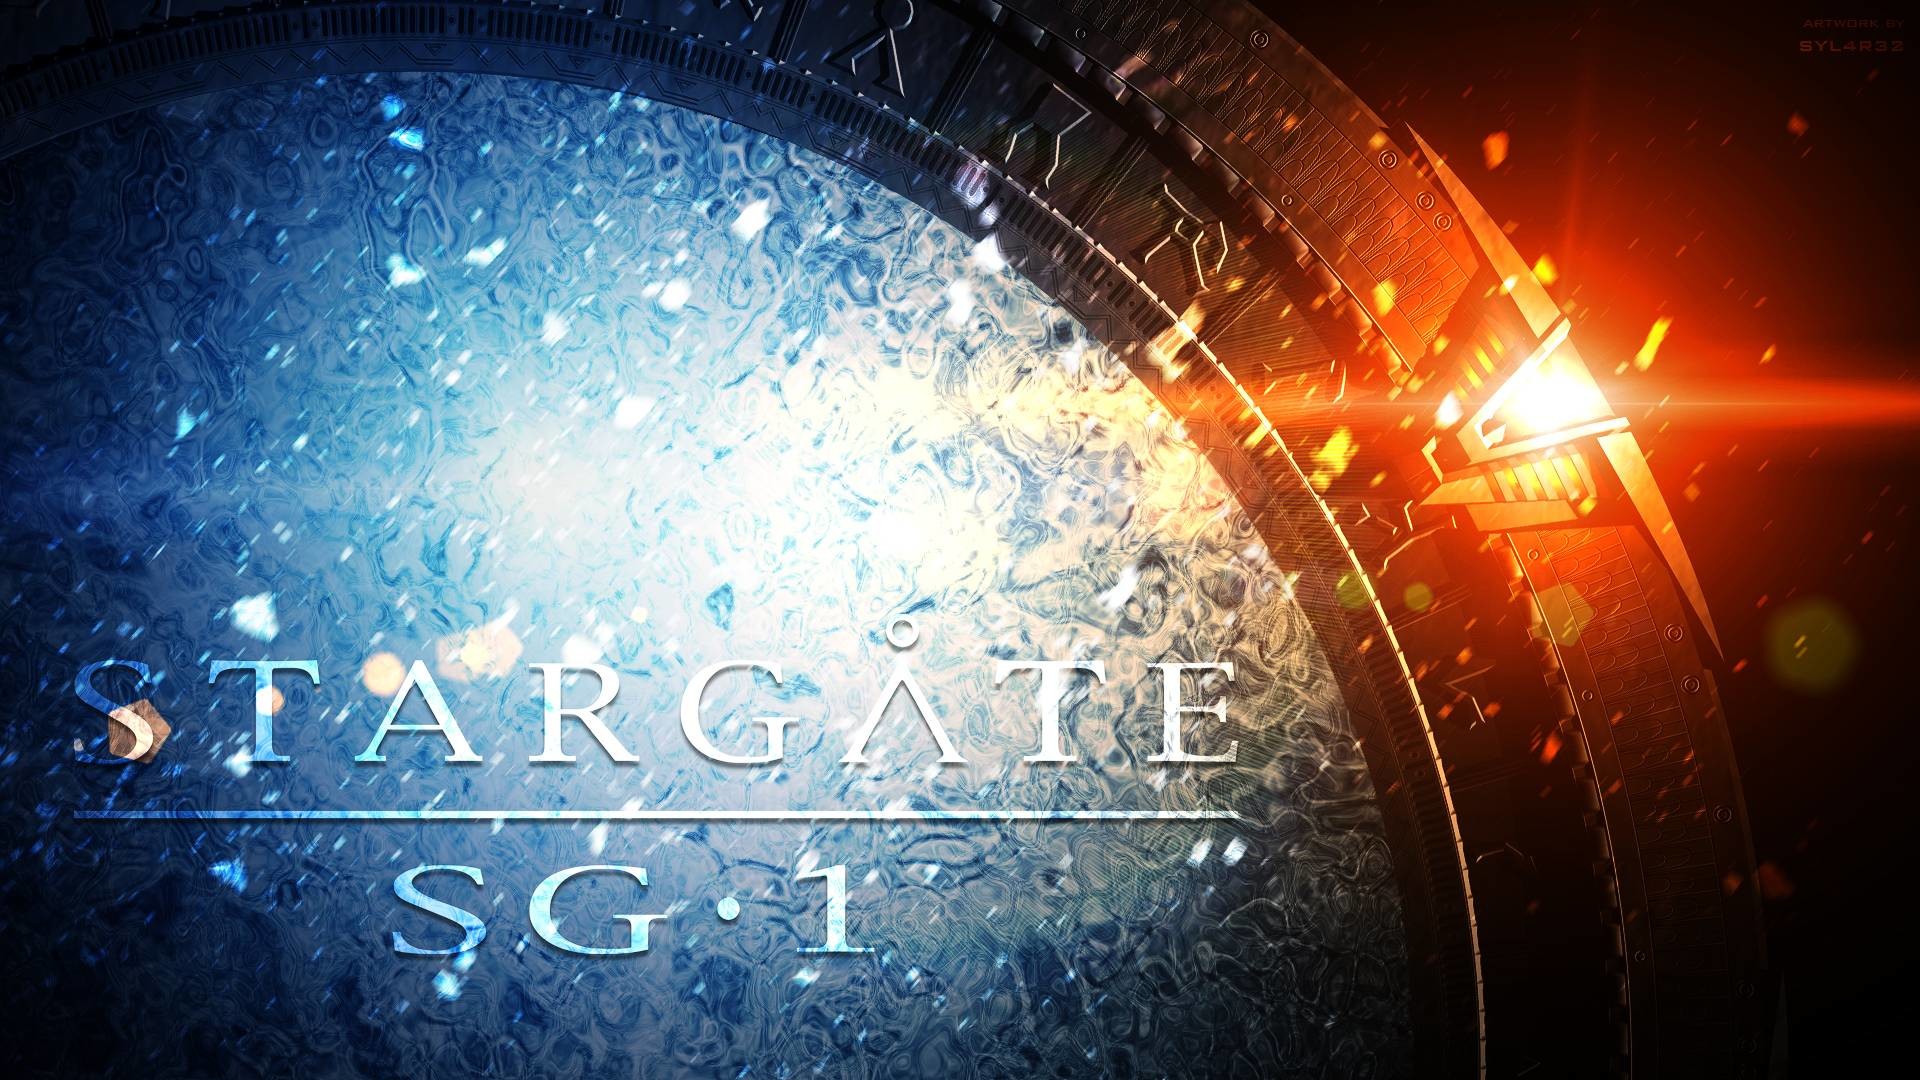 1920x1080 Stargate SG-1 Title Wallpaper by SYL4R32 on DeviantArt